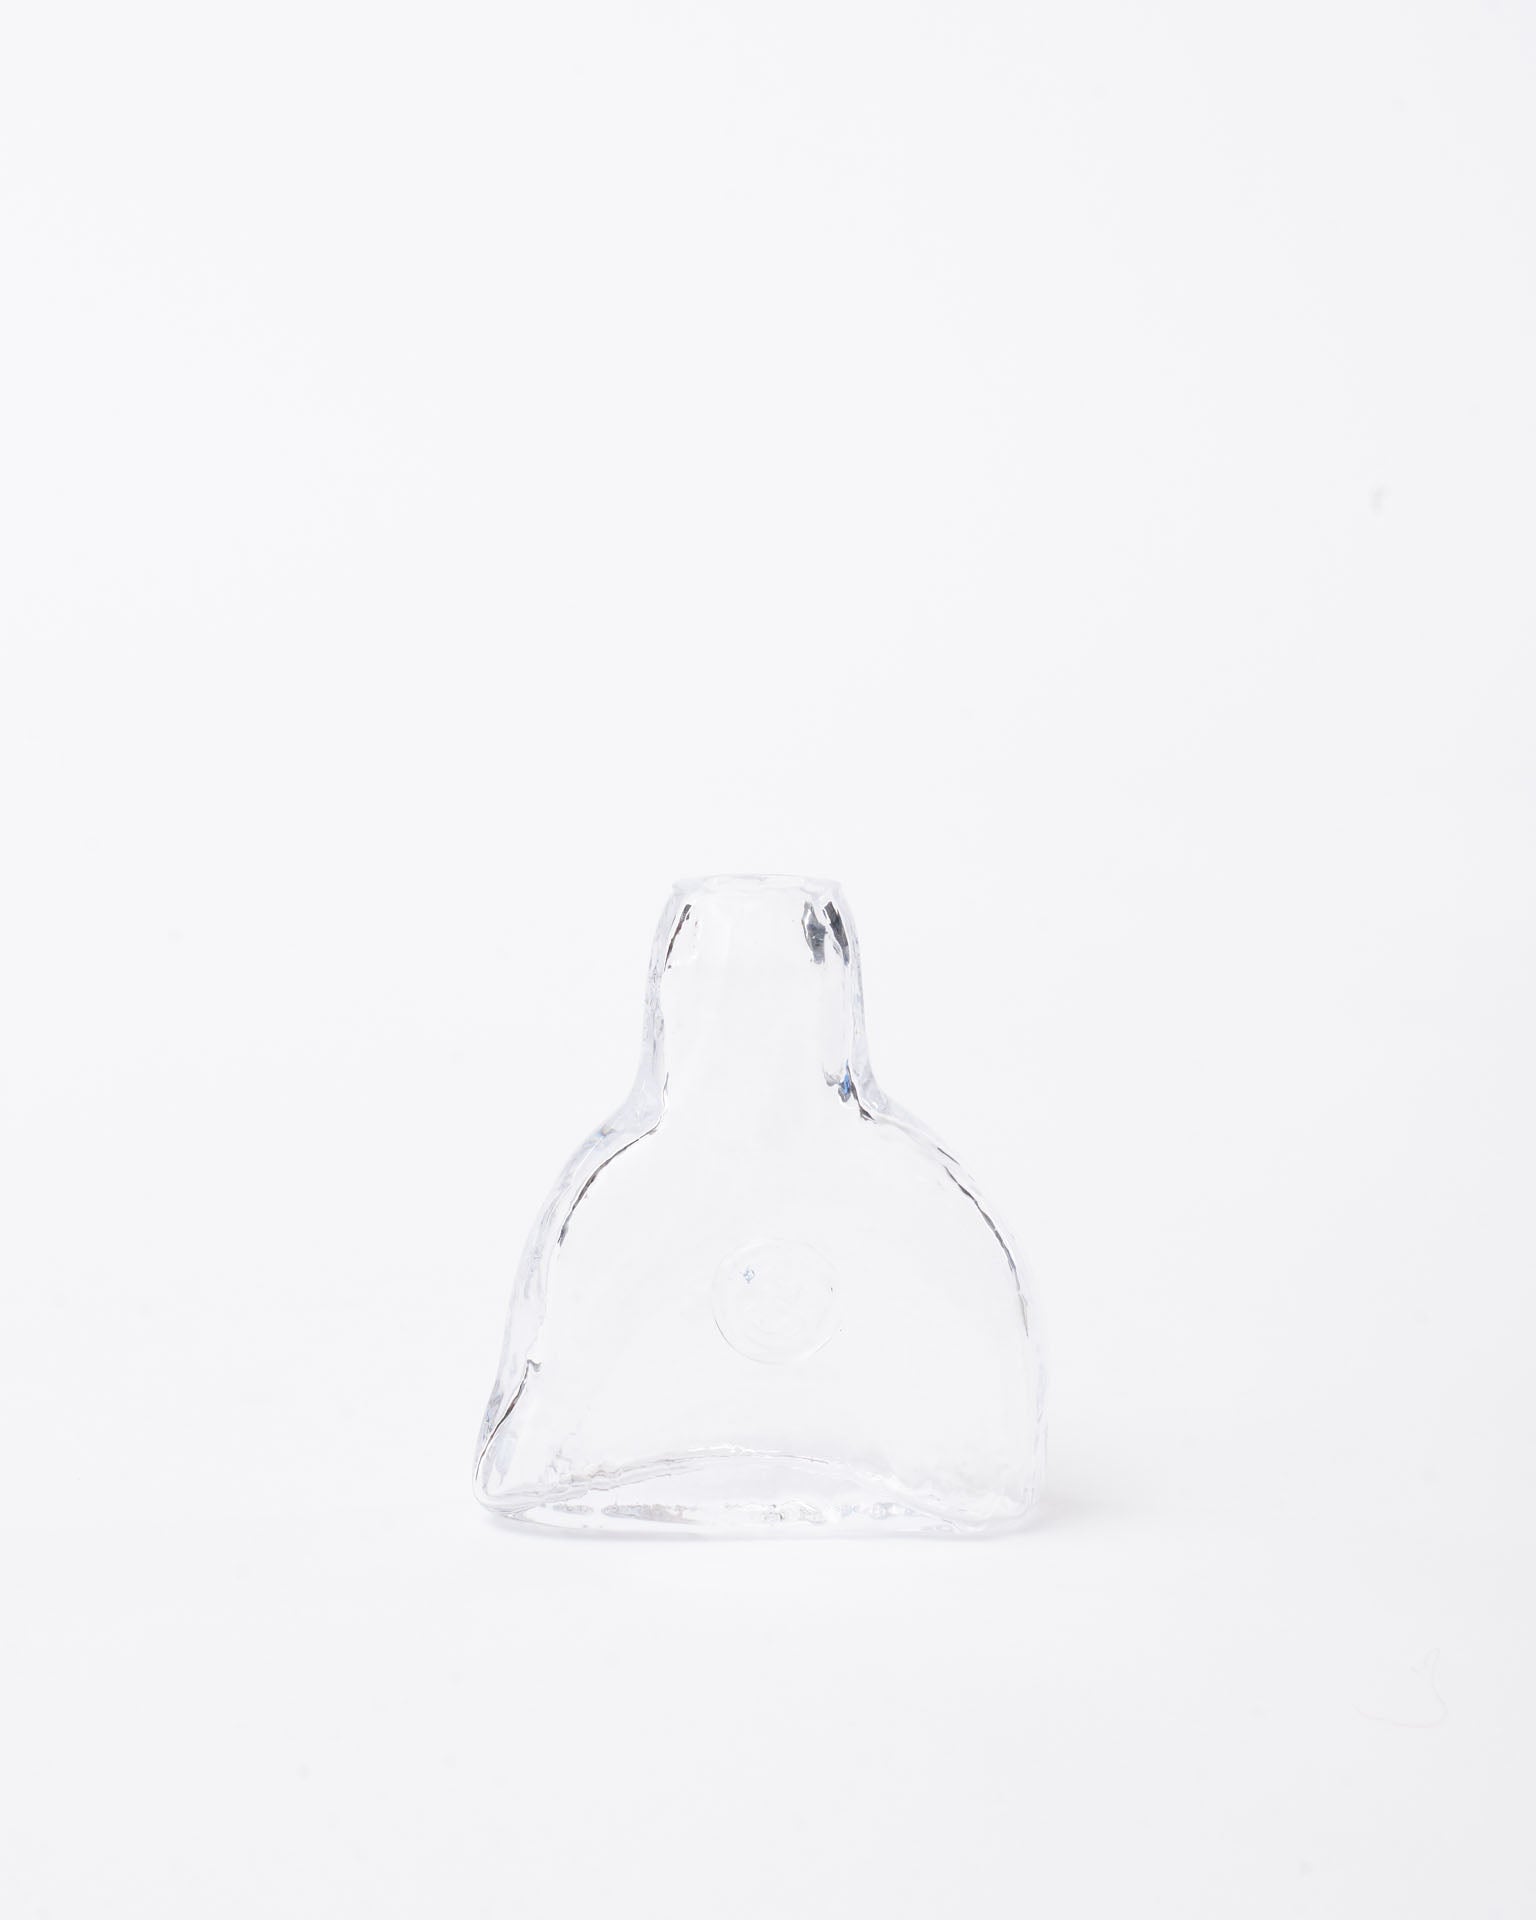 Modern small vase in white background